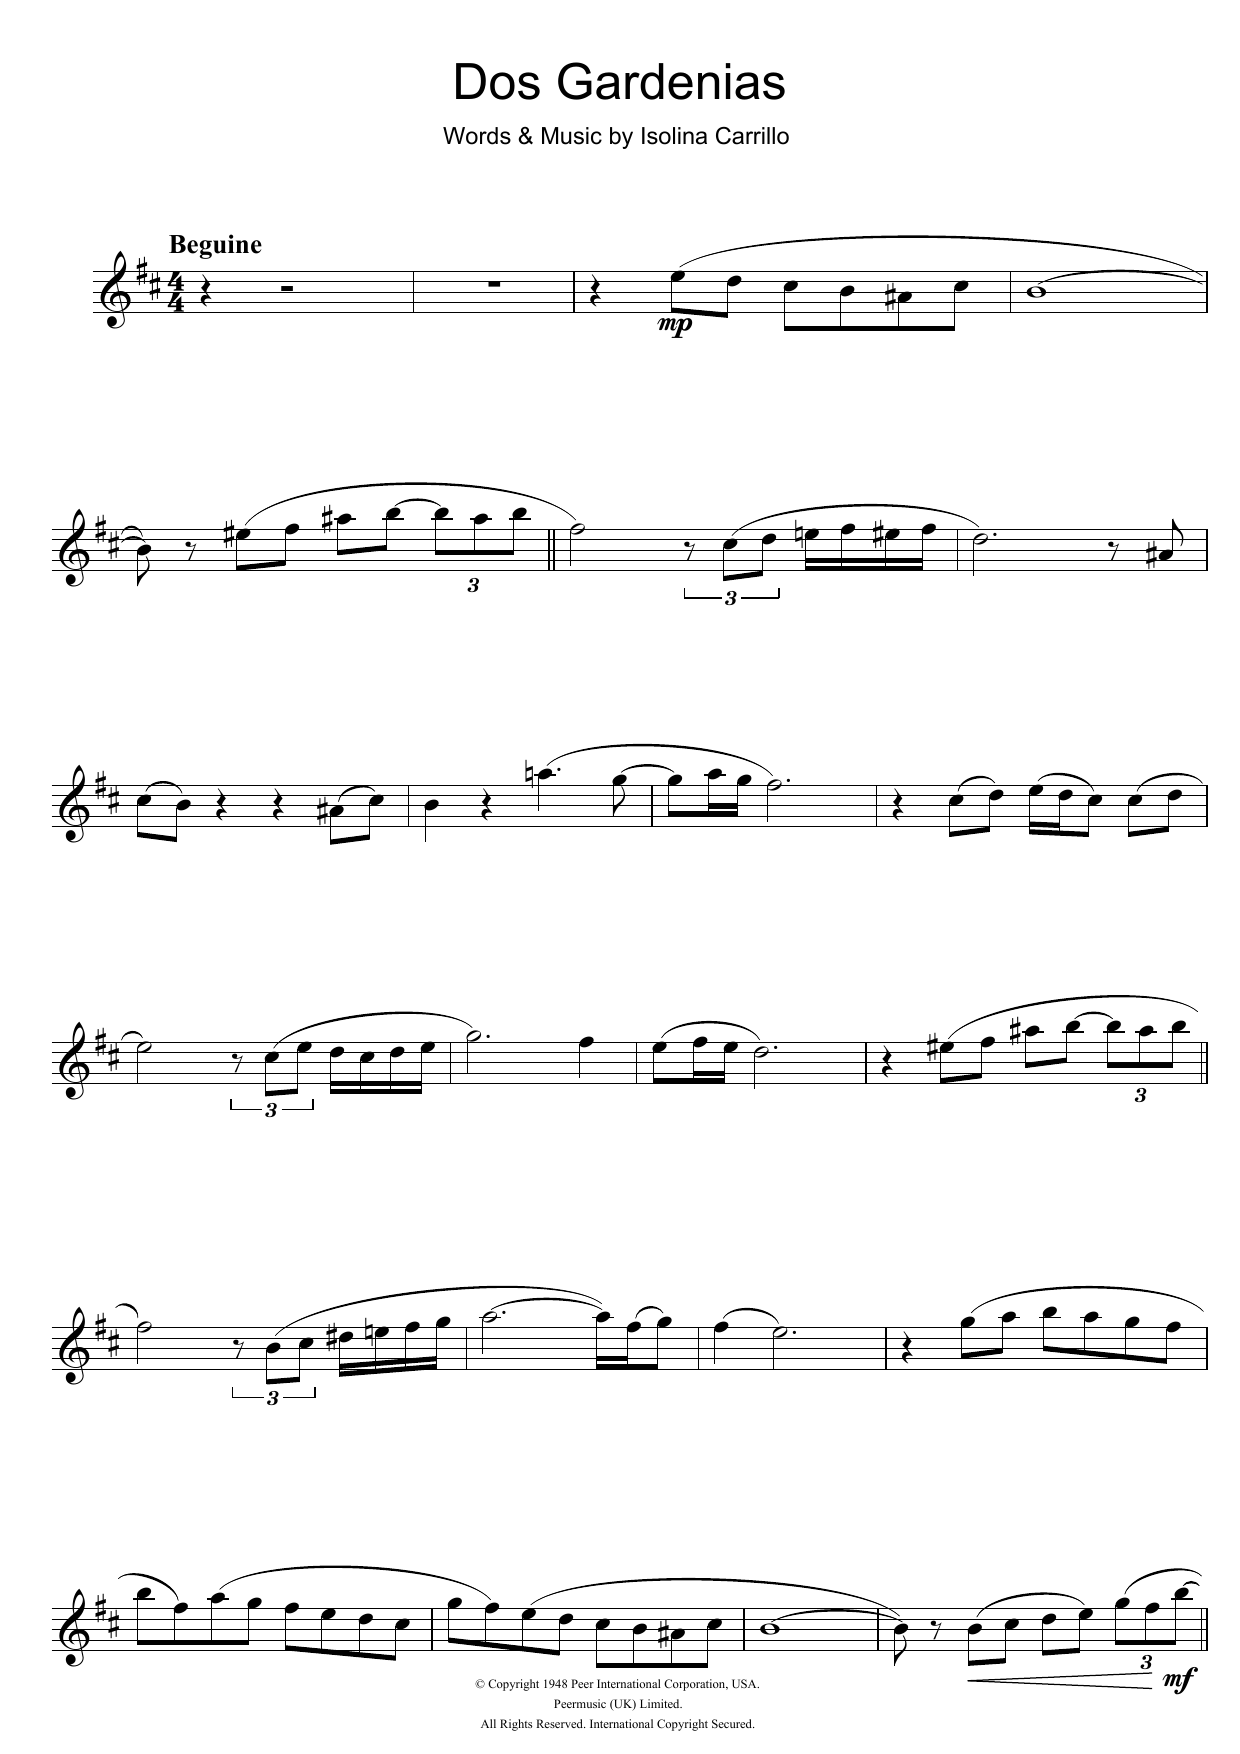 Buena Vista Social Club Dos Gardenias Sheet Music Notes & Chords for Clarinet - Download or Print PDF